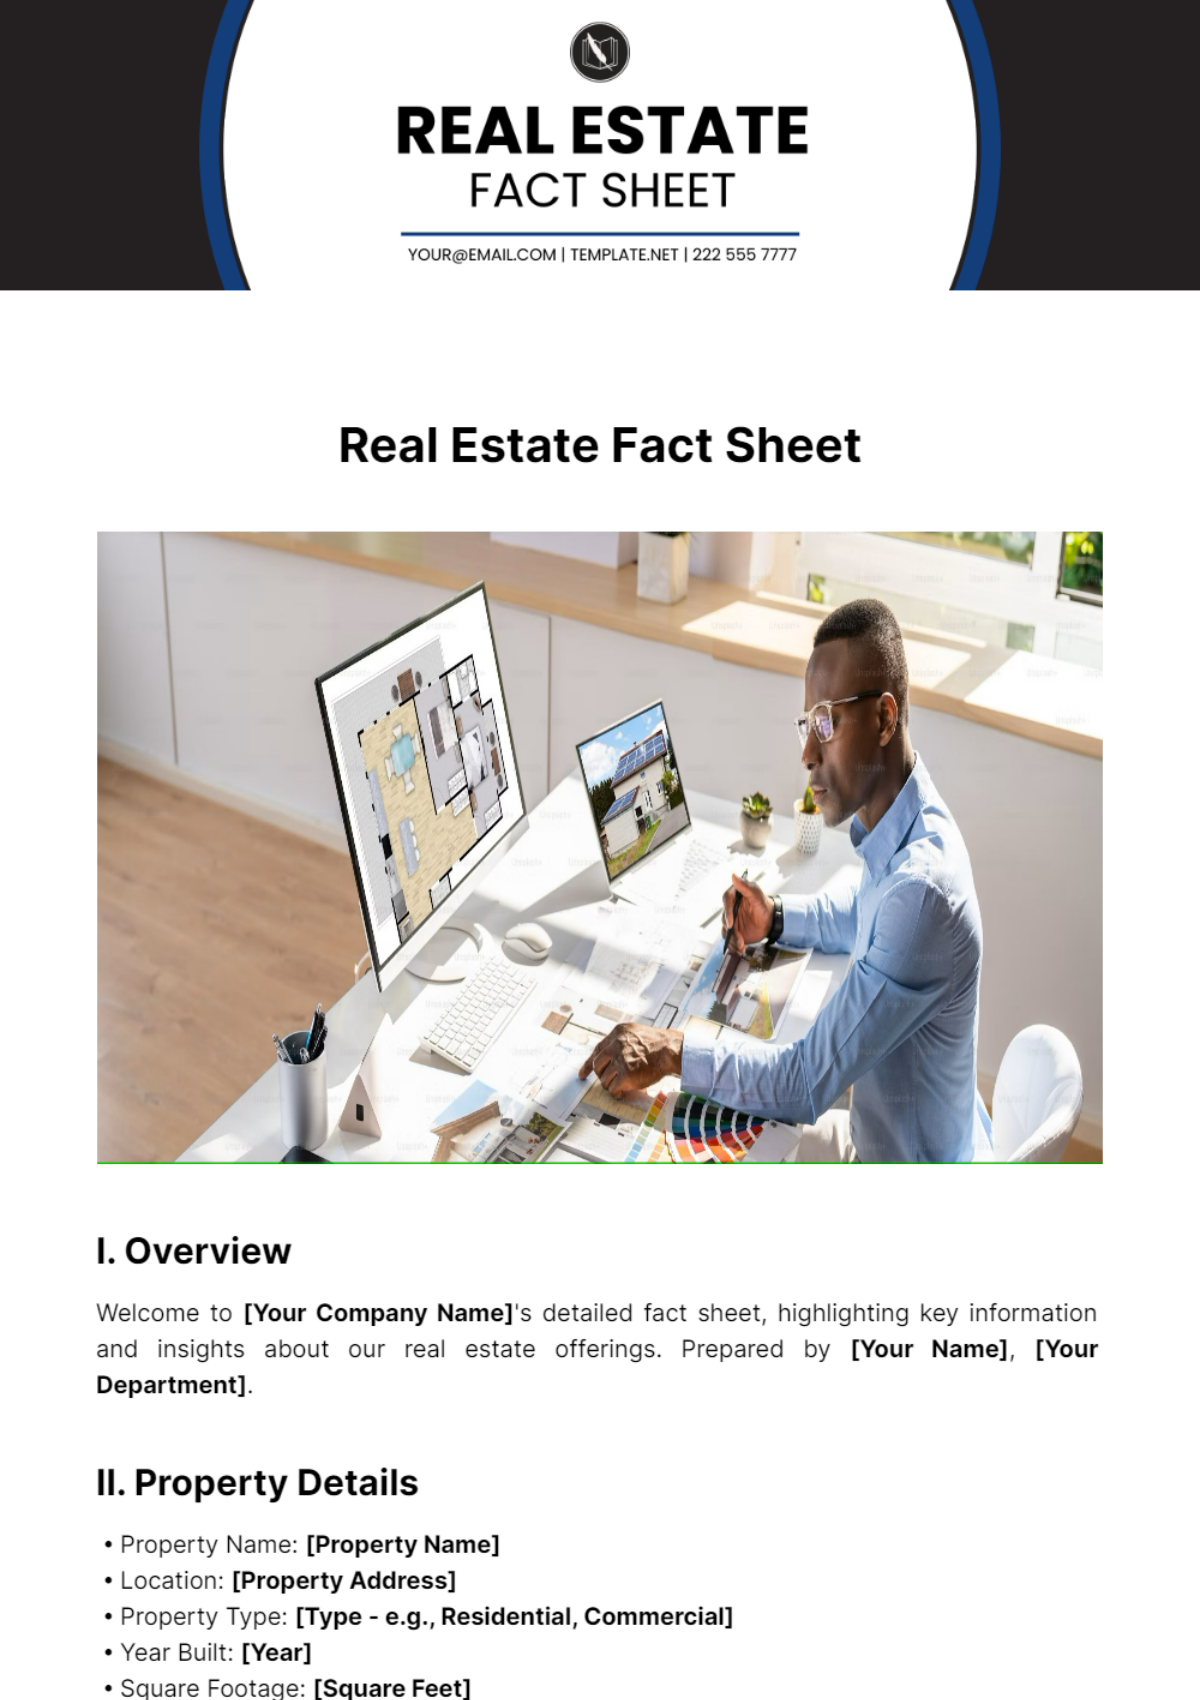 Real Estate Fact Sheet Template